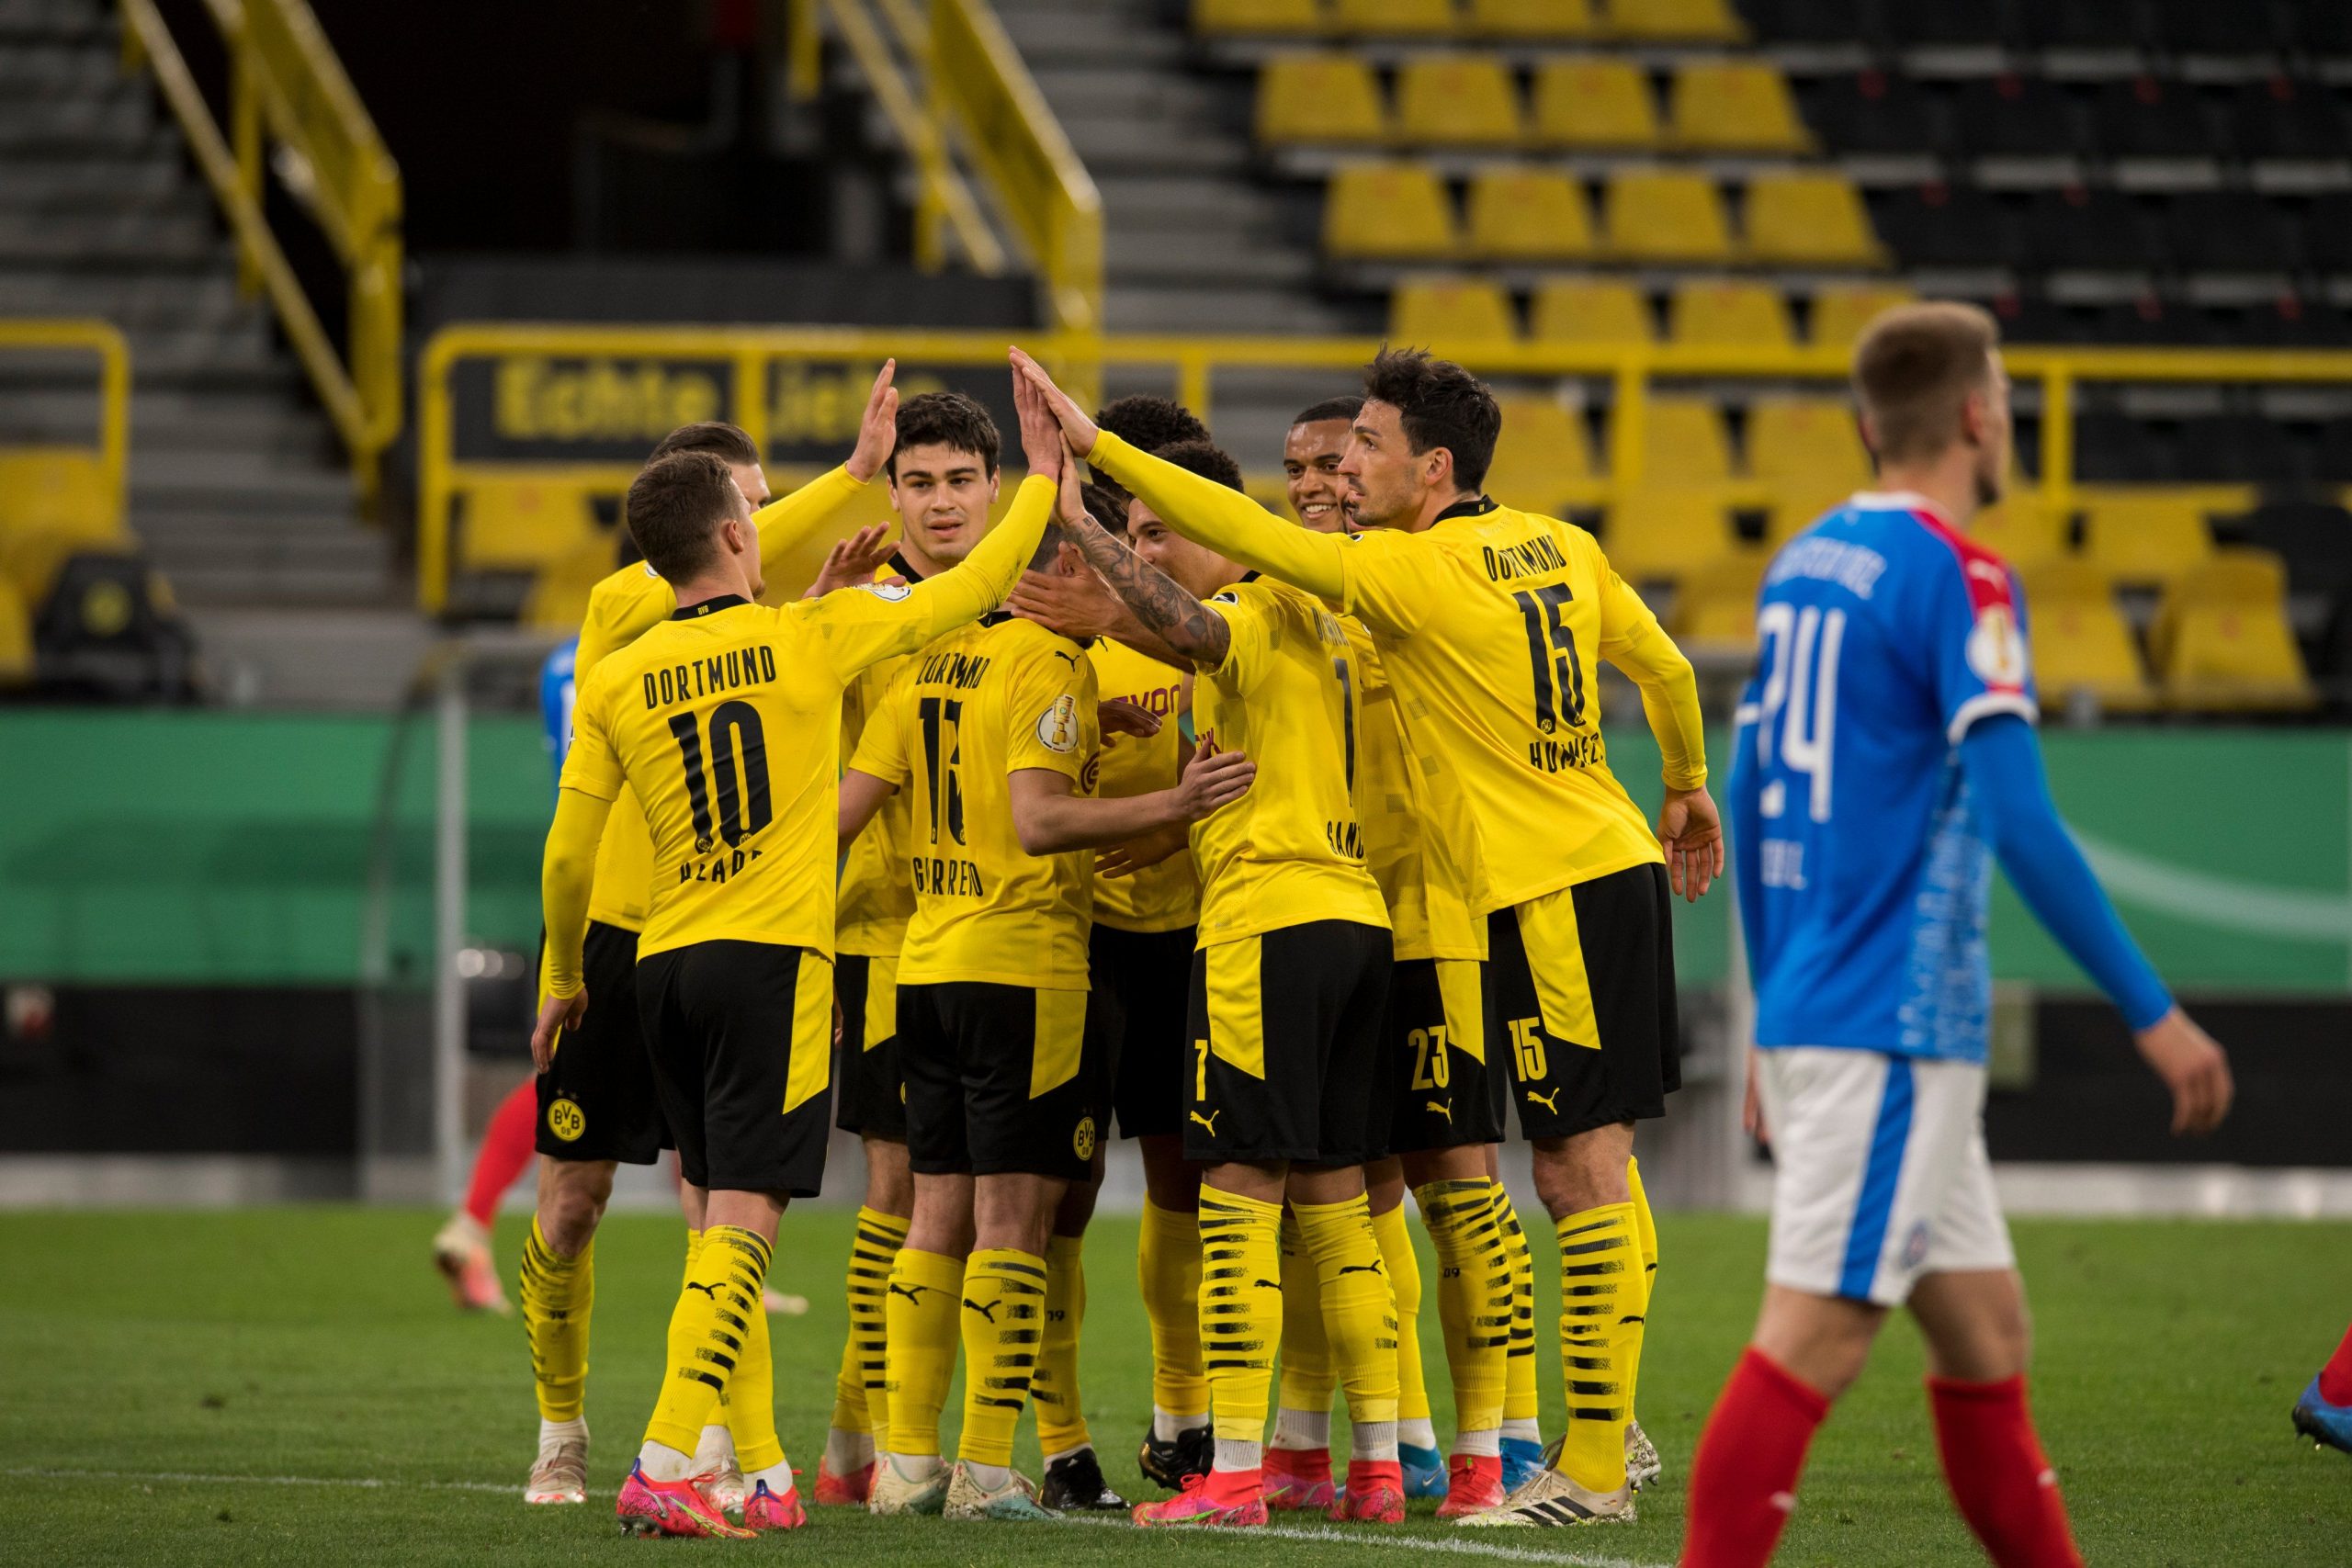 No Erling Haaland, no problem as Dortmund rout Kiel to reach German Cup final